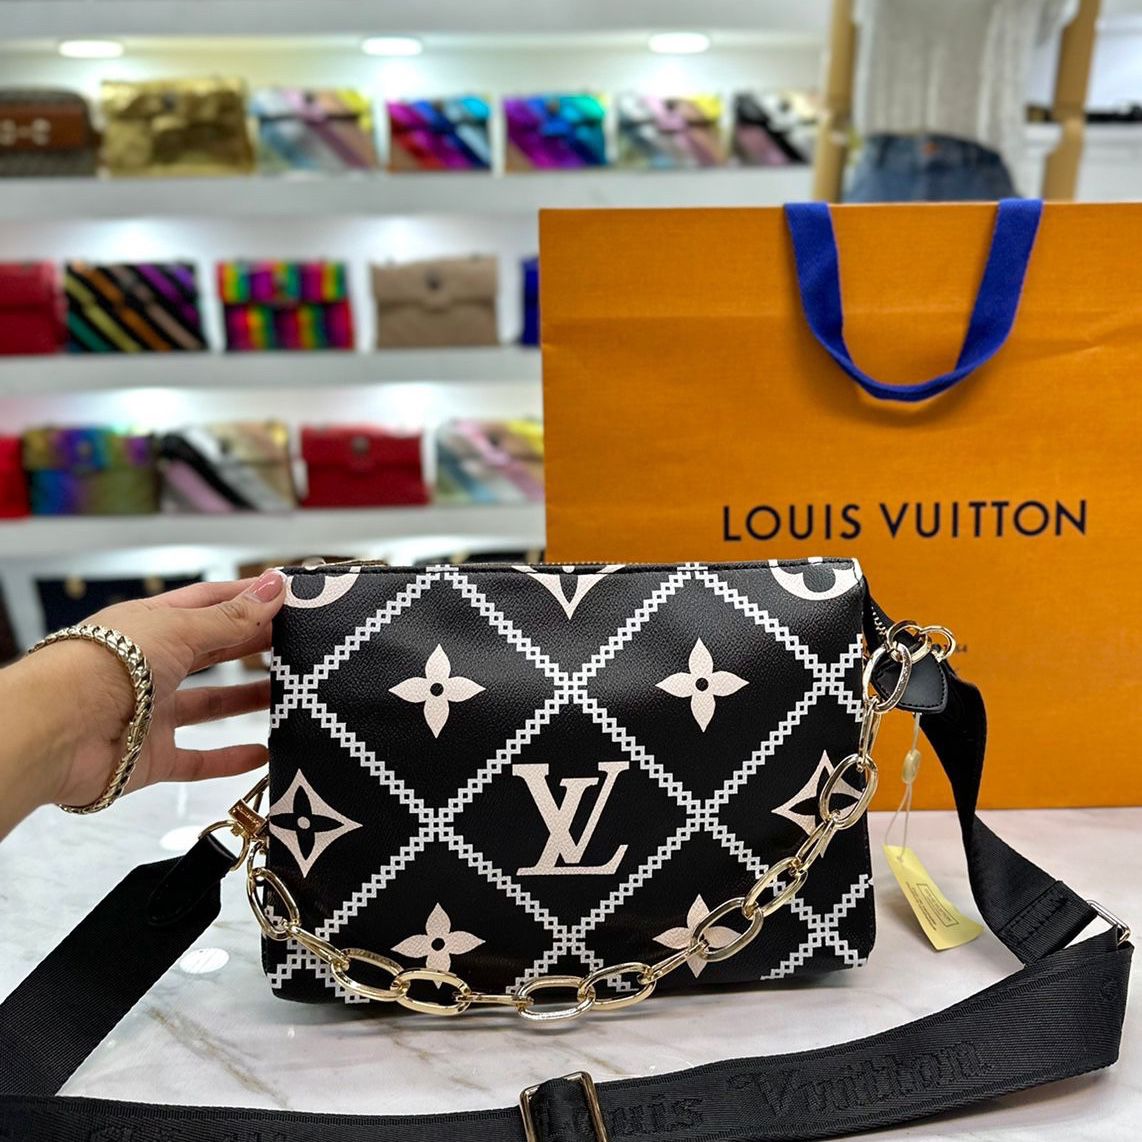 Louis Vuitton Boho Purse for Sale in El Paso, TX - OfferUp